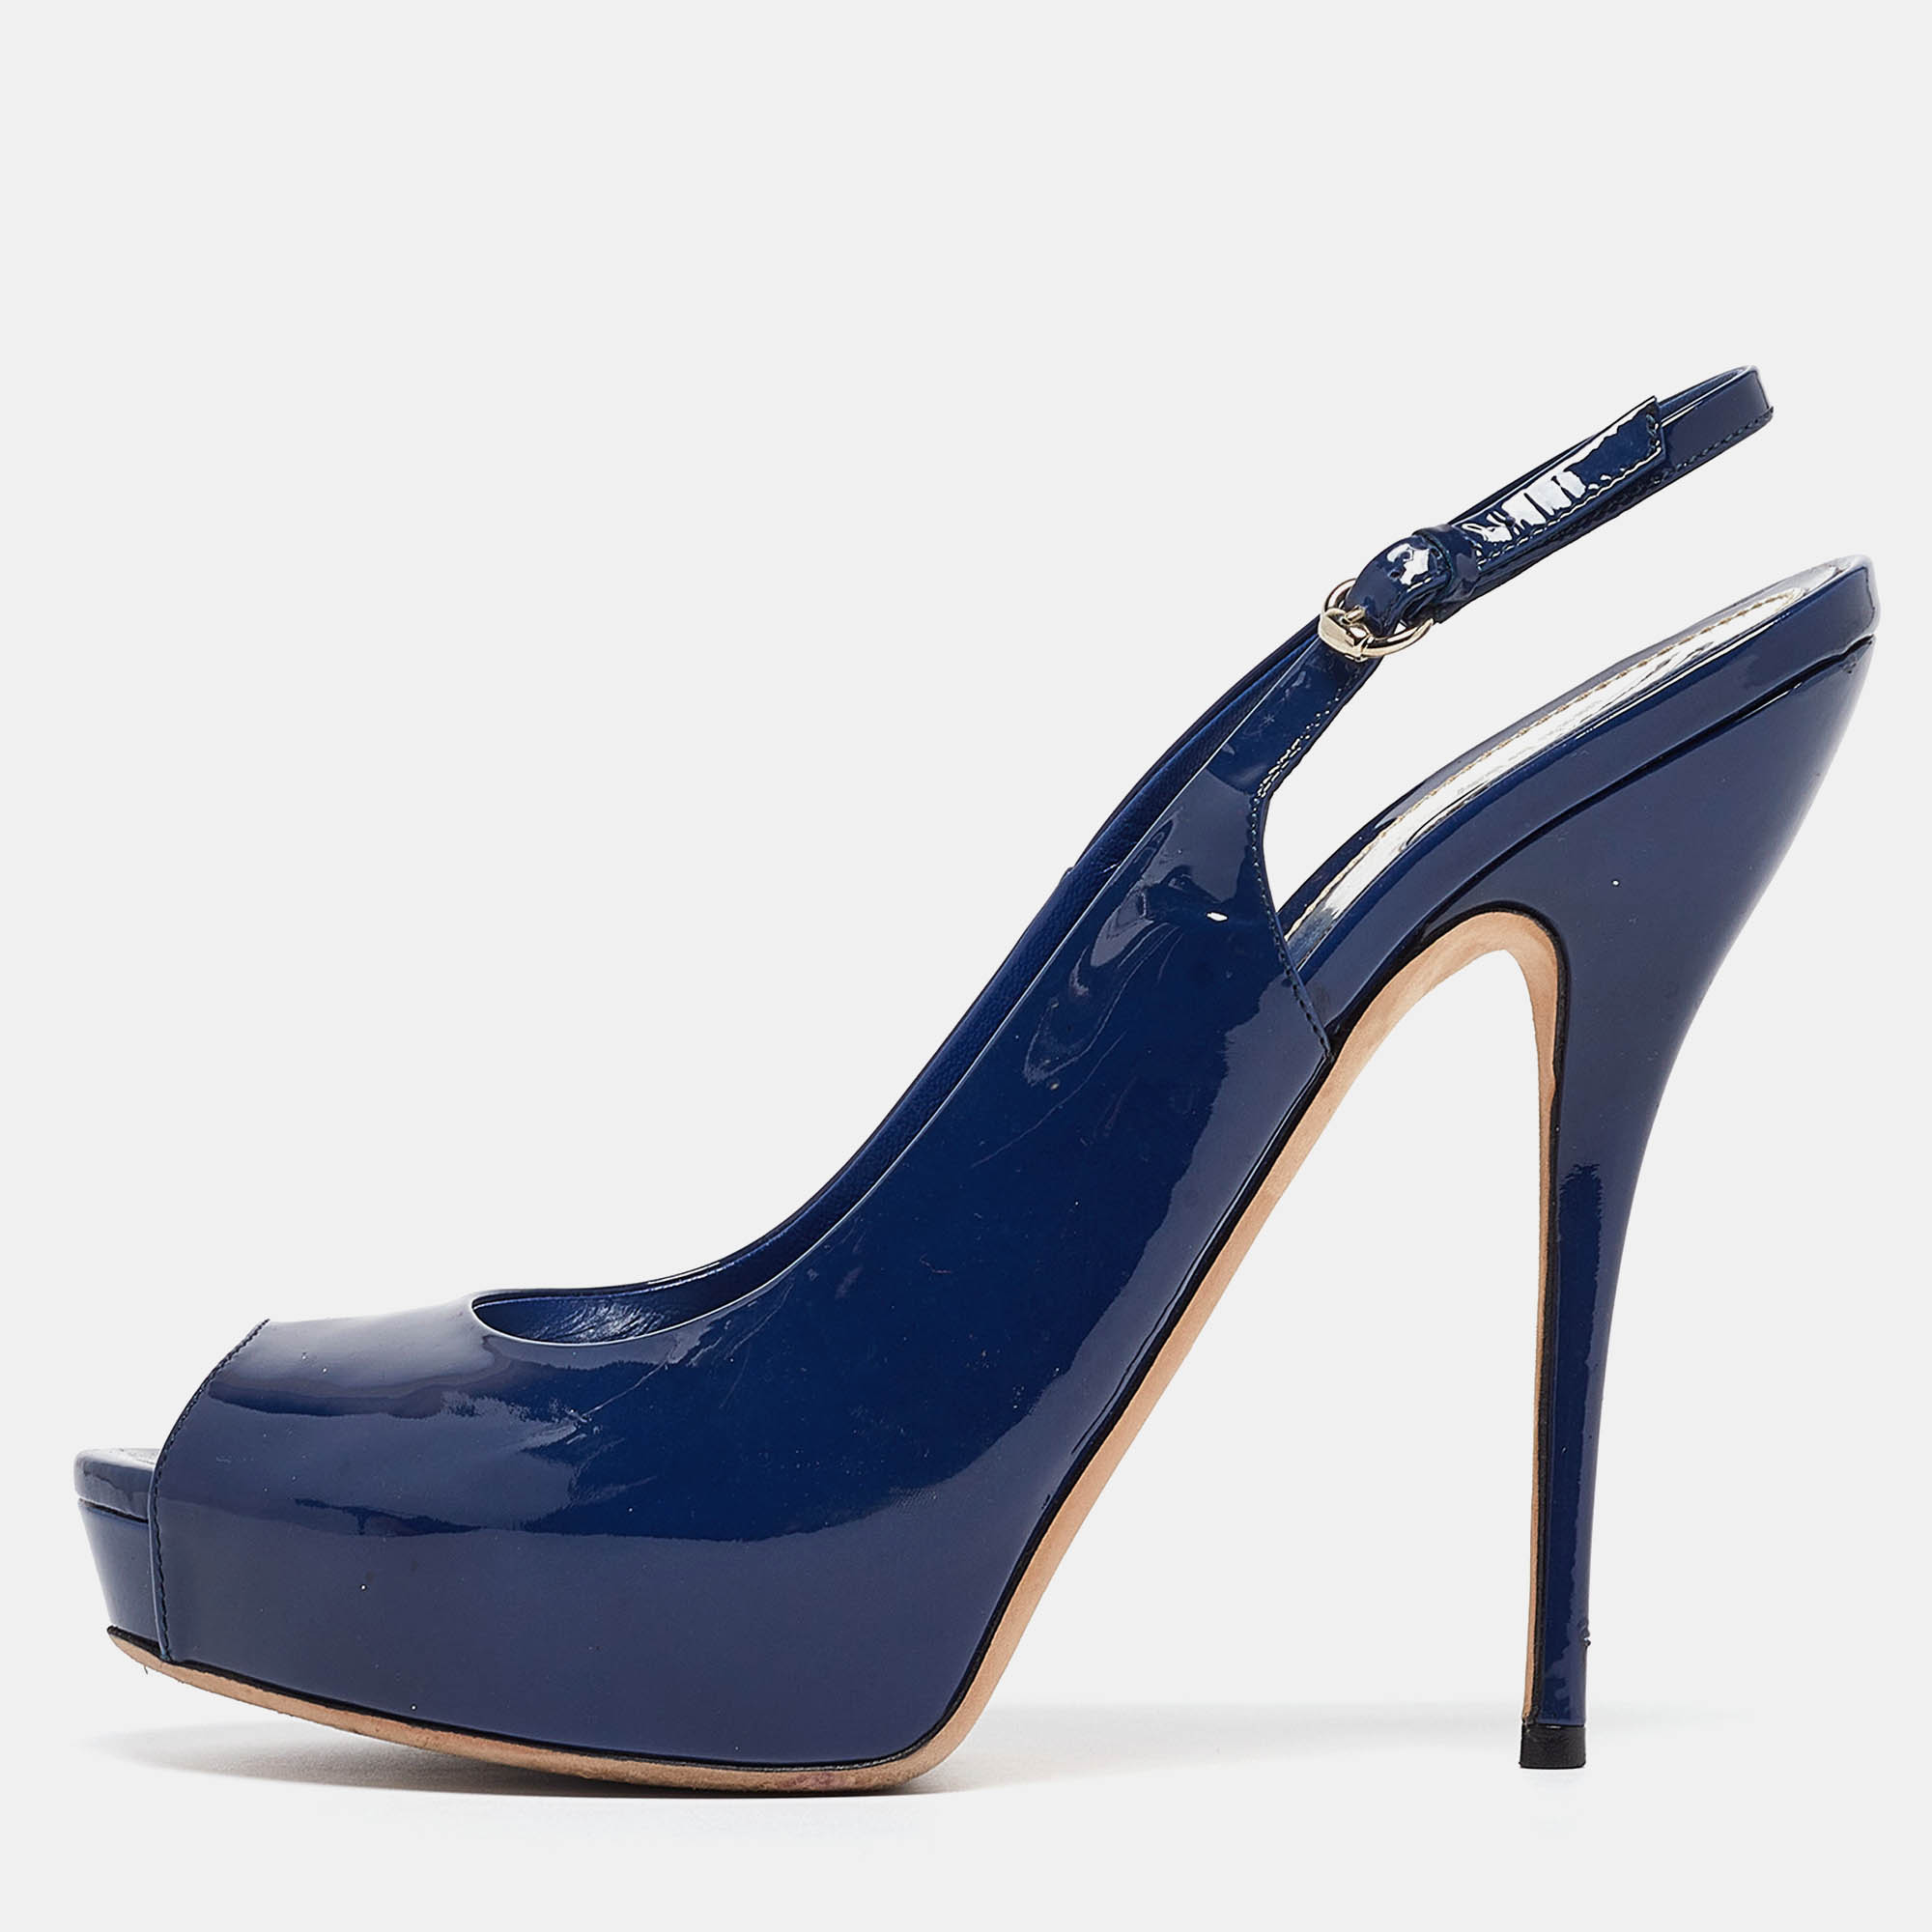 Gucci blue patent sofia peep toe slingback pumps size 40.5